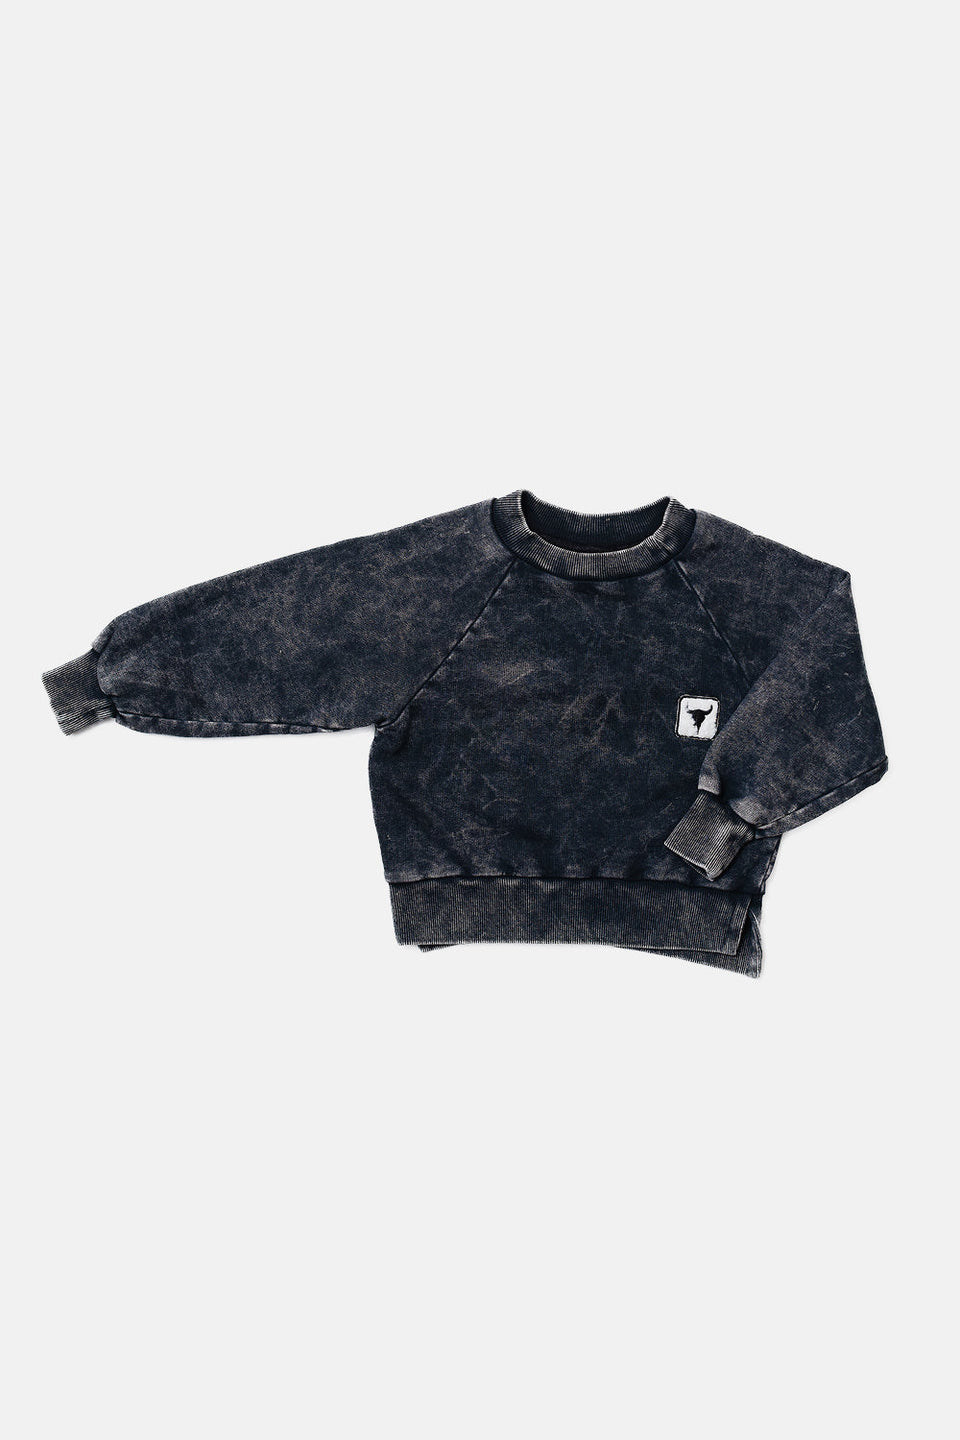 Booso Black Acid Wash Vintage Sweatshirt